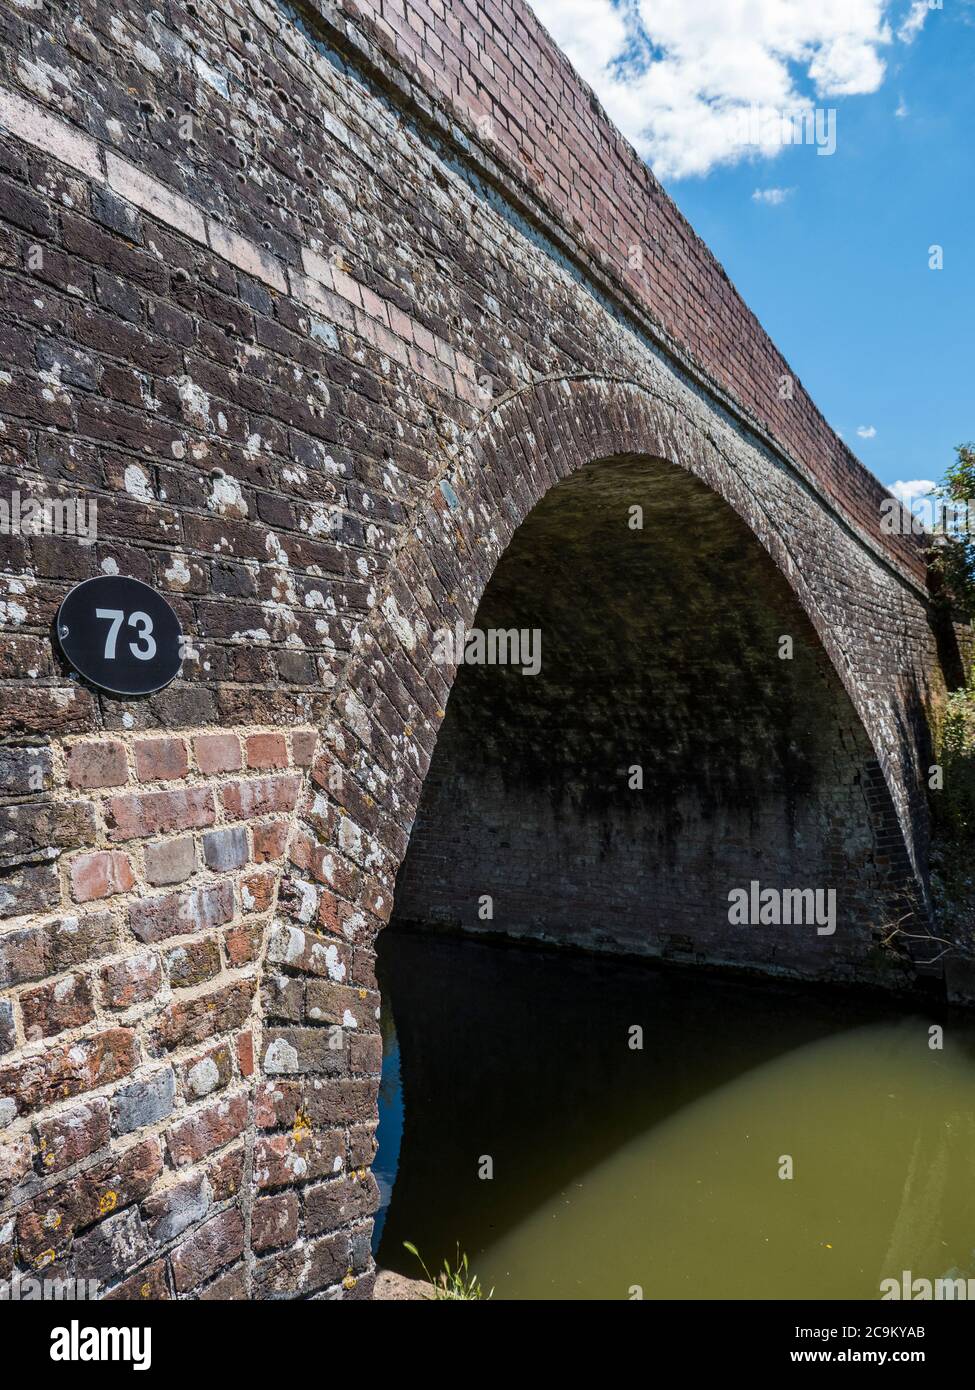 Canal Bridge, Kennett et Avon Canal, Kintbury, Hungerford, Berkshire, Angleterre, Royaume-Uni, GB. Banque D'Images